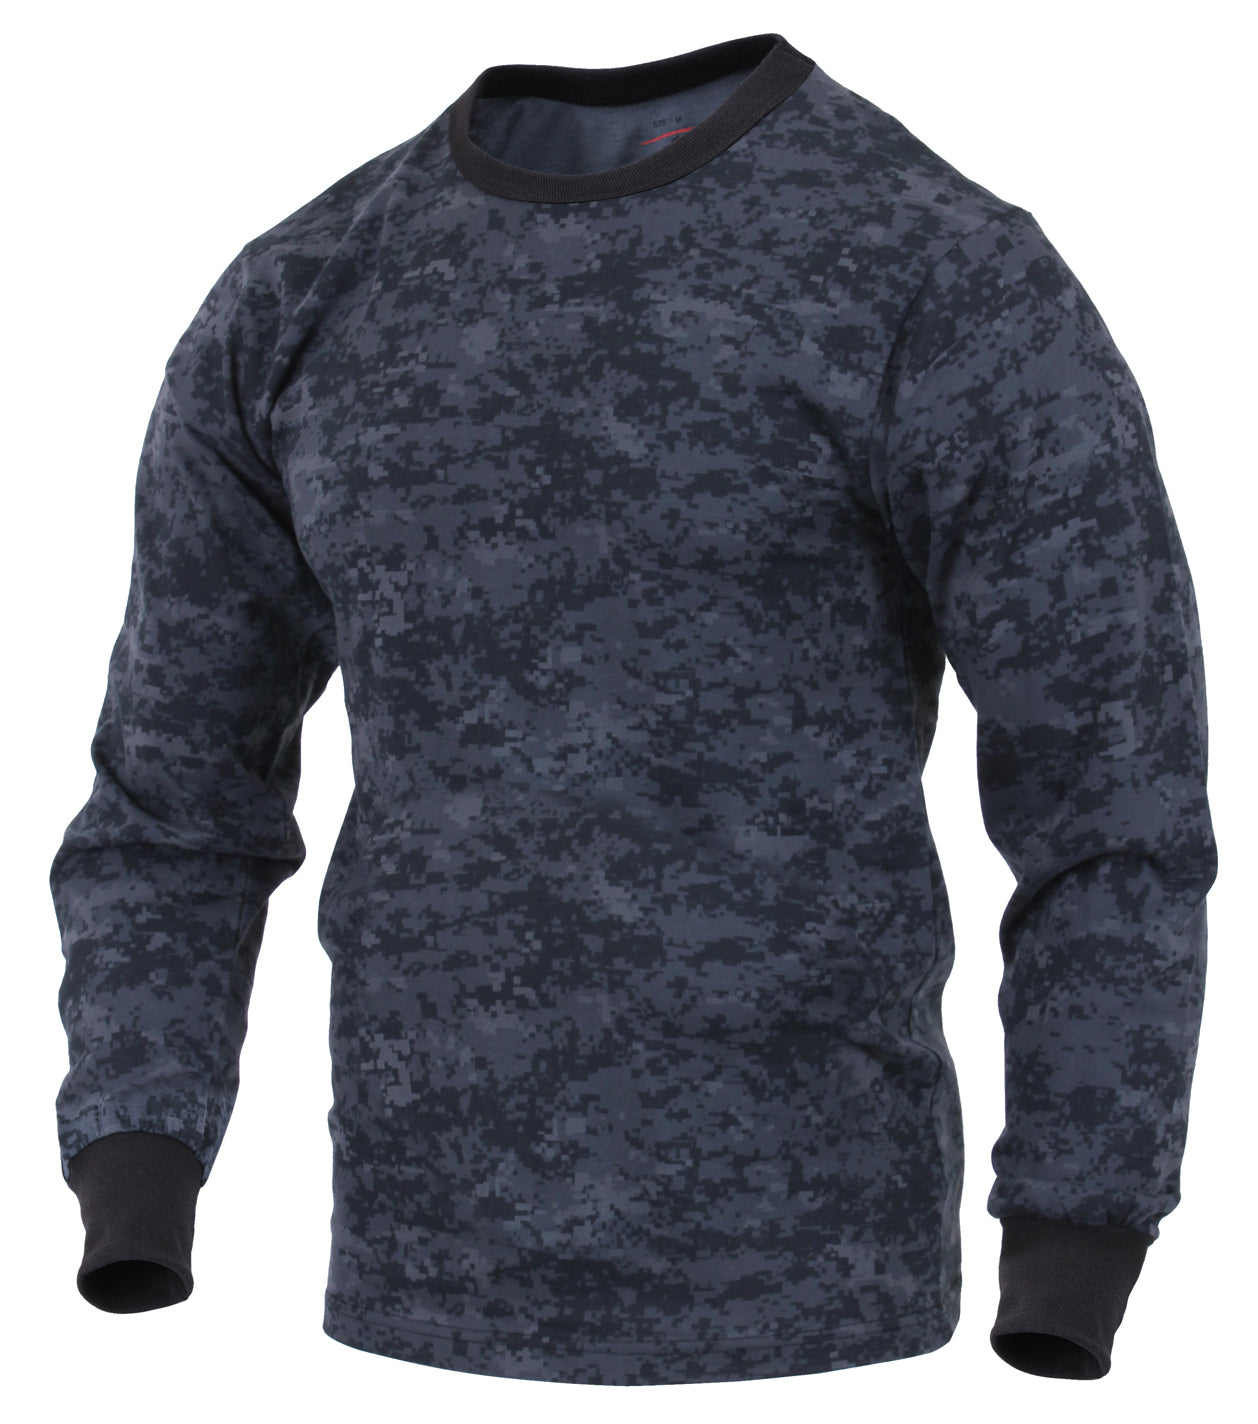 Milspec Long Sleeve Digital Camo T-Shirt Camo T-Shirts MilTac Tactical Military Outdoor Gear Australia